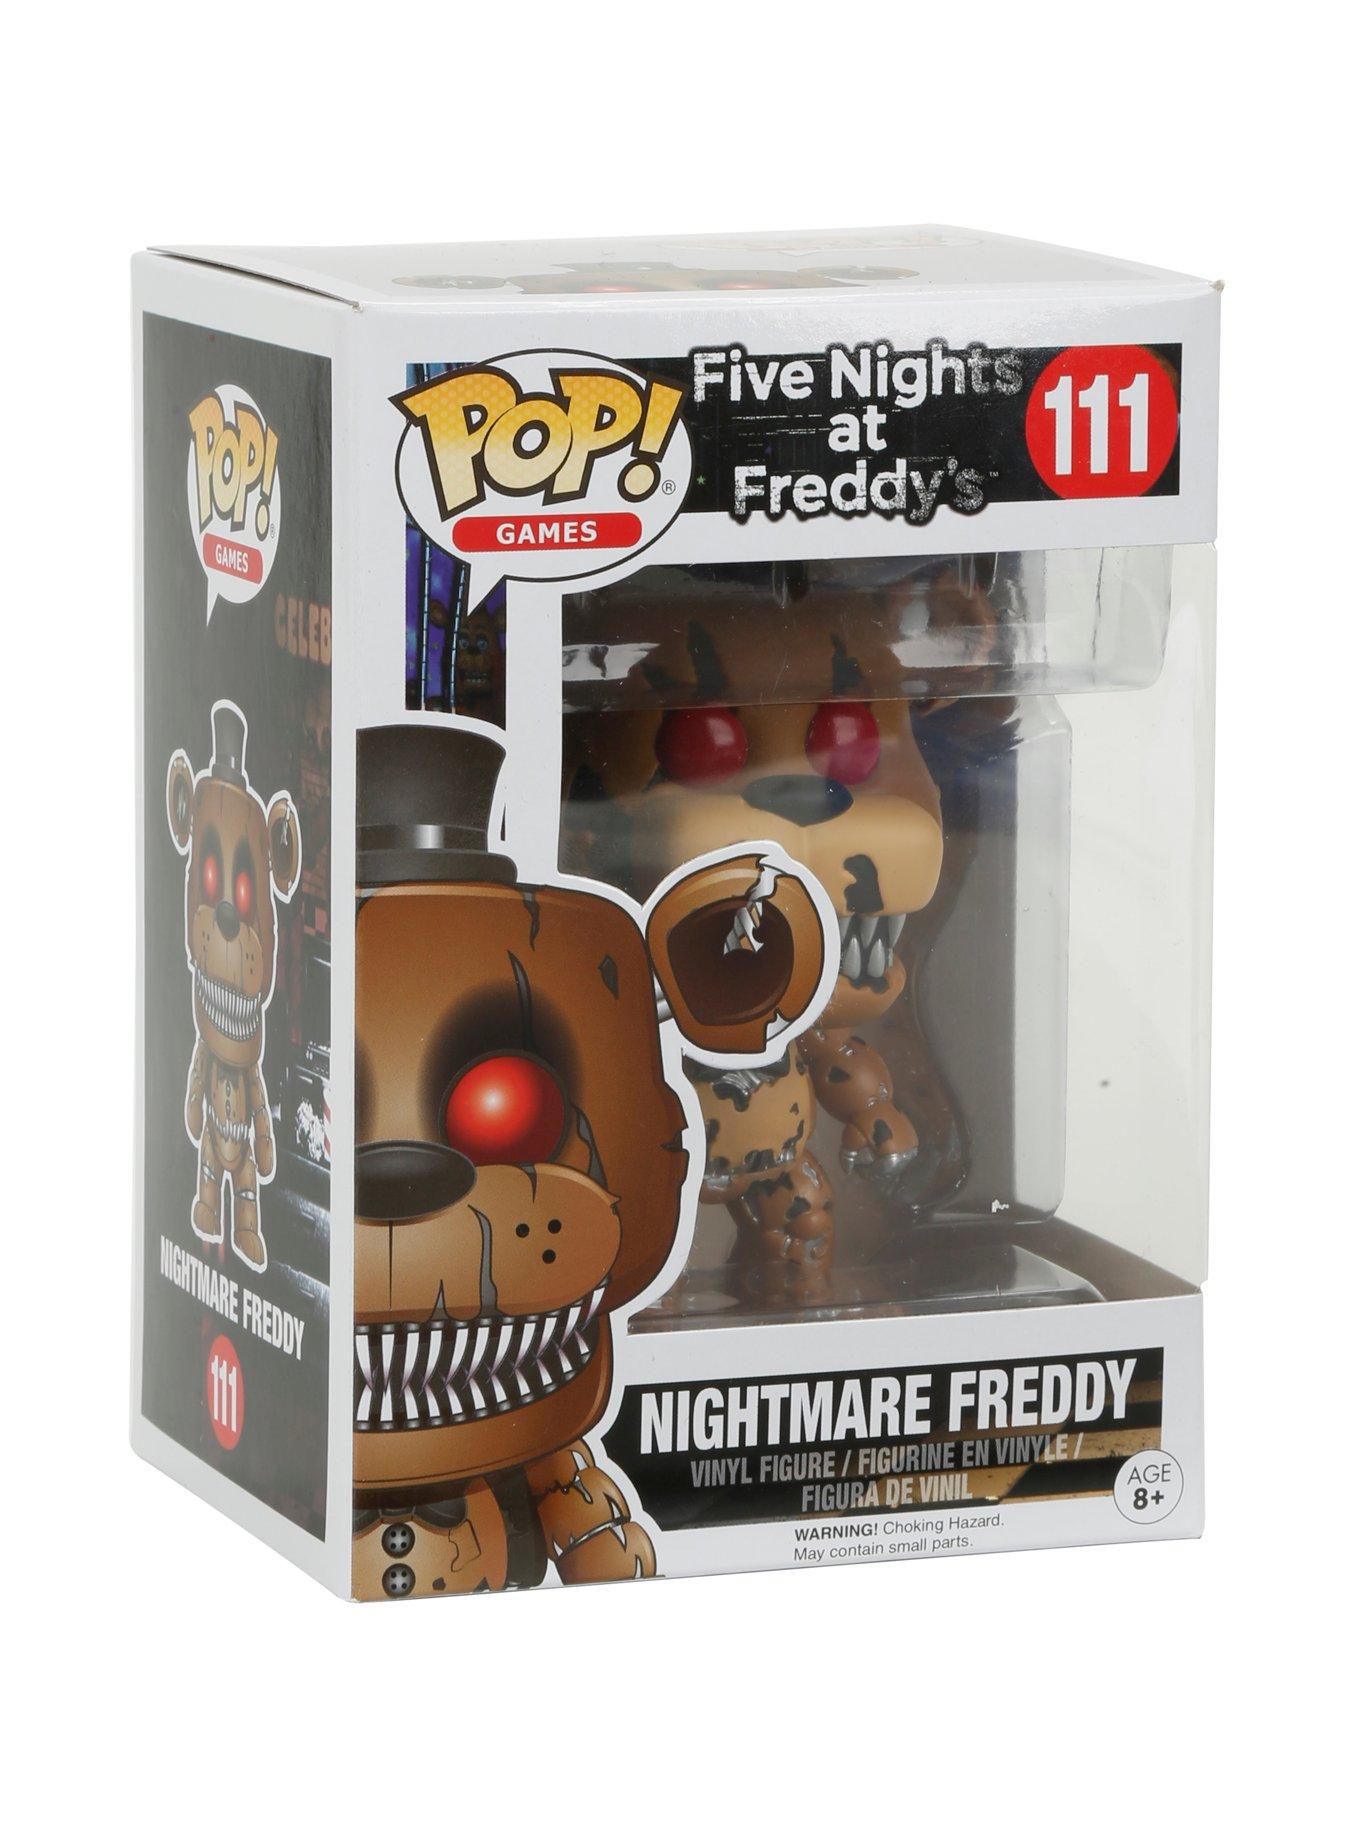  Funko Five Nights at Freddy's - Nightmare Freddy Toy